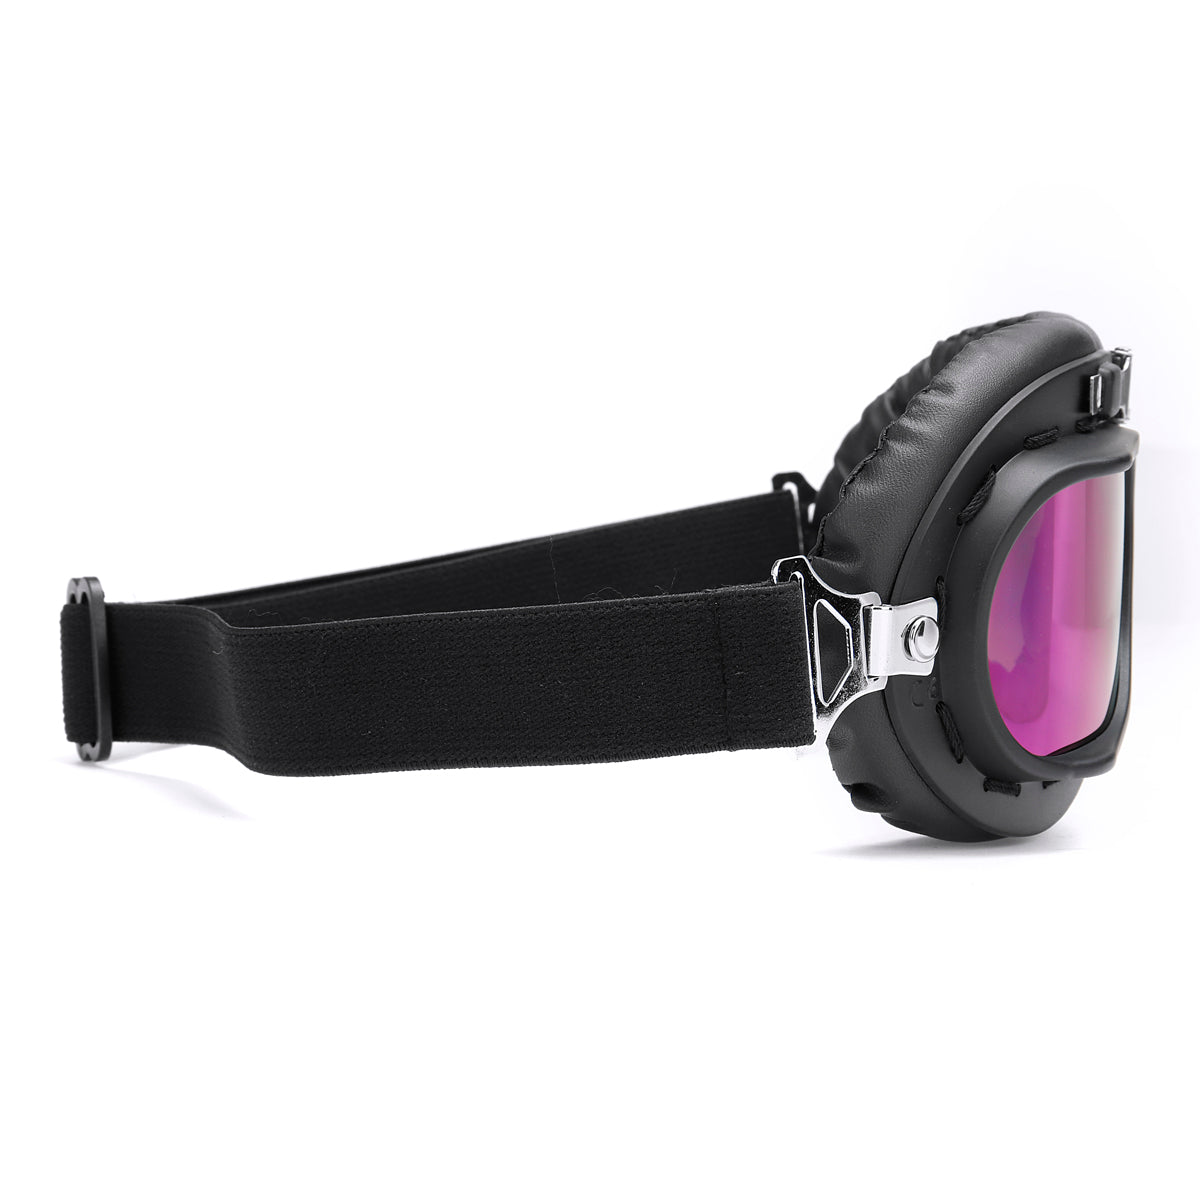 Windproof Retro Helmet Goggles Motorcycle Skiing Scooter ATV Flying Eyewear Glasses - Auto GoShop